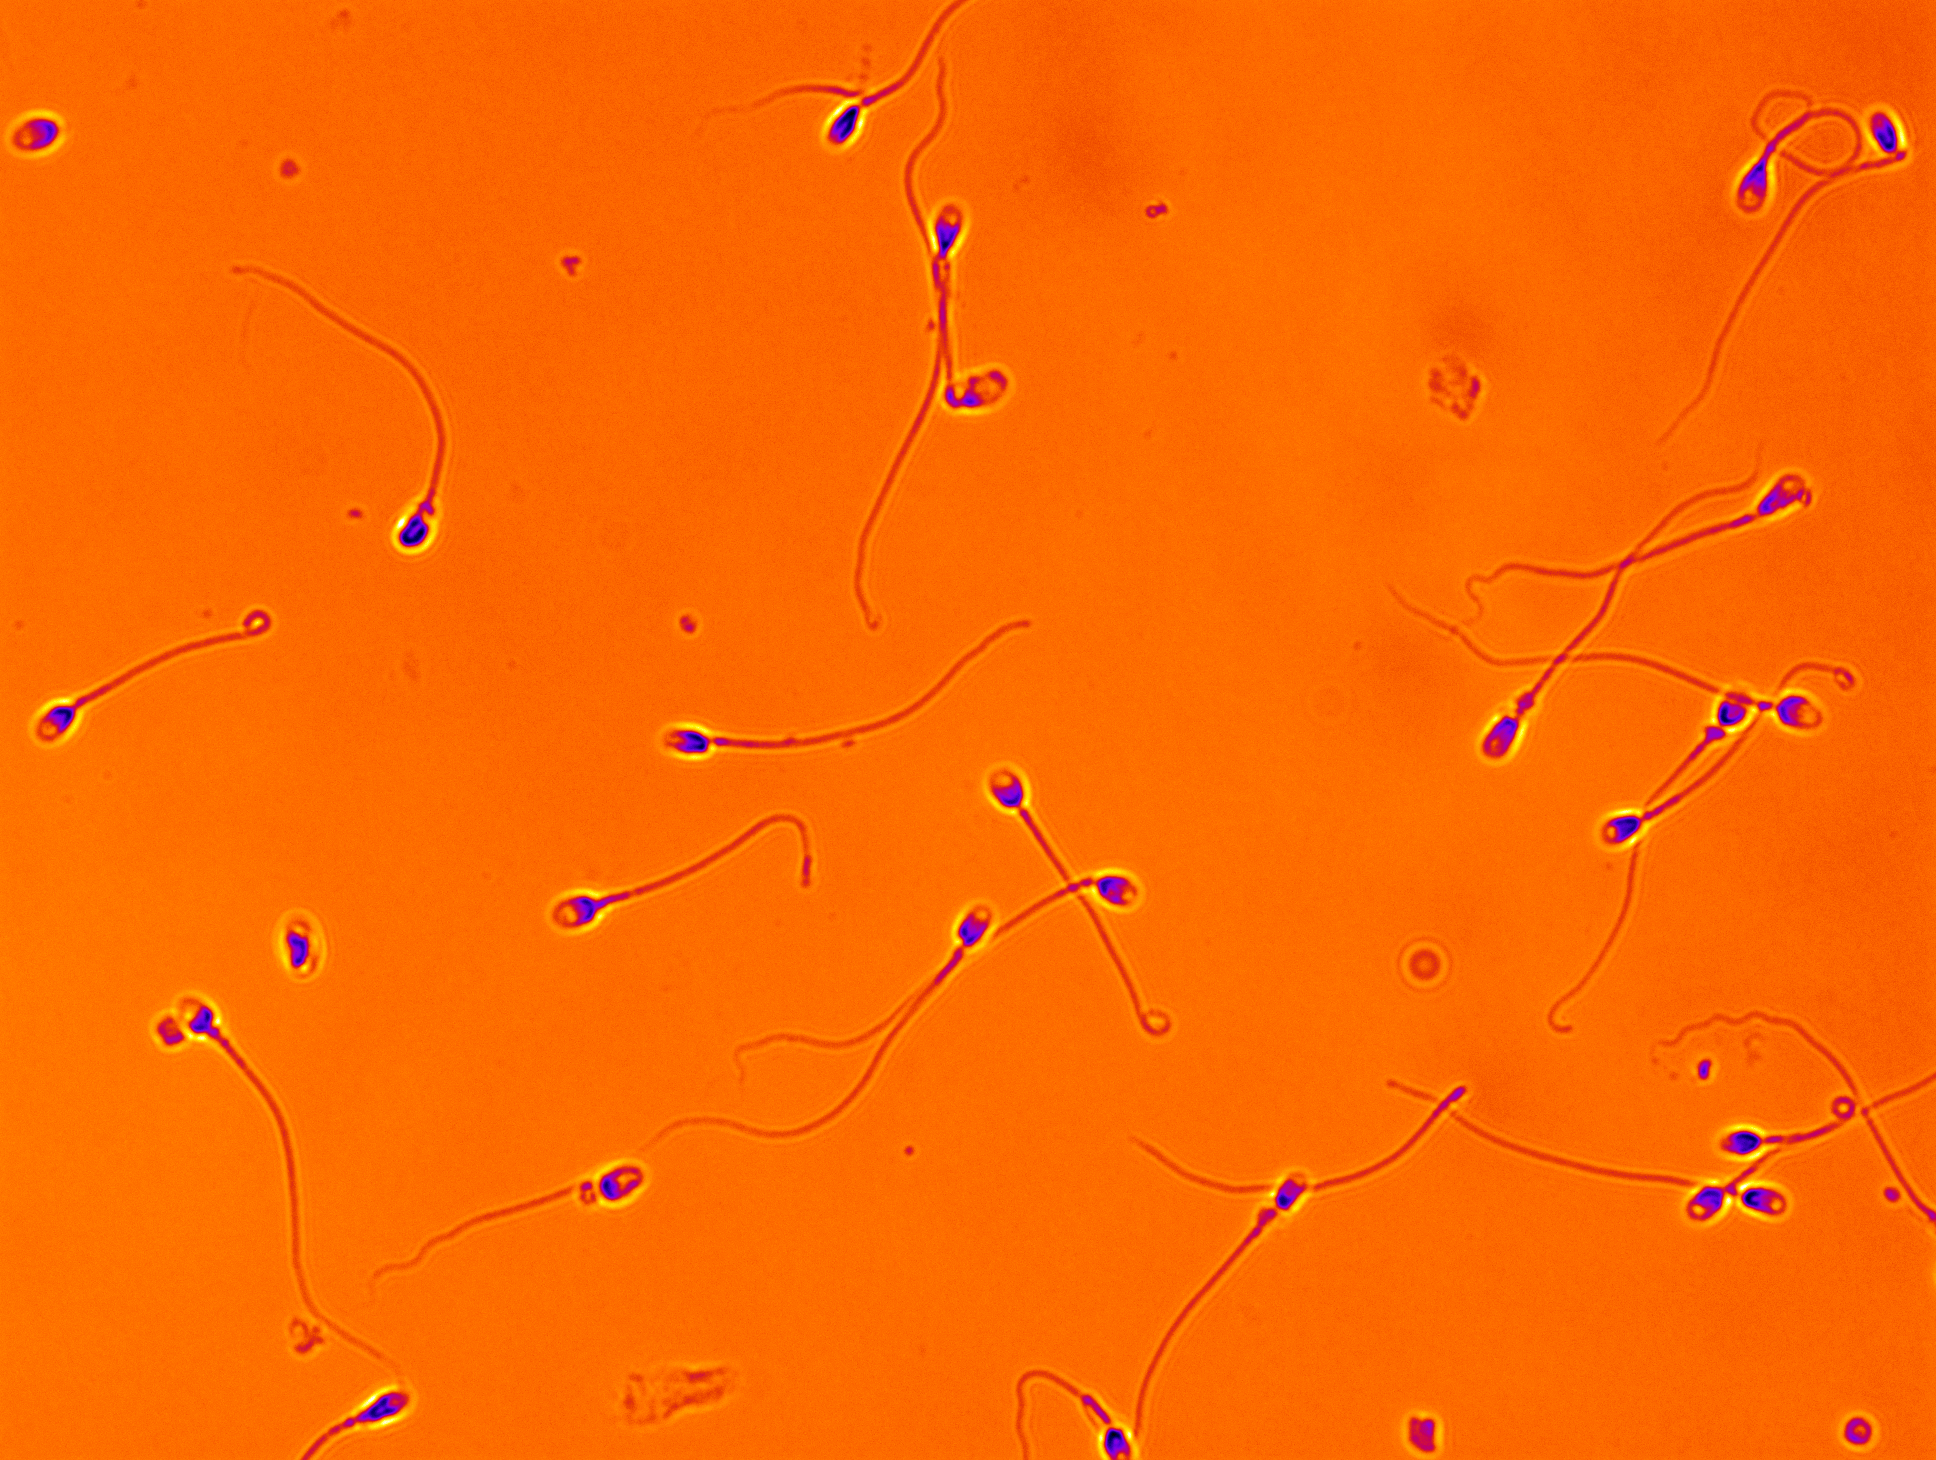 Microscopic image of sperm cells